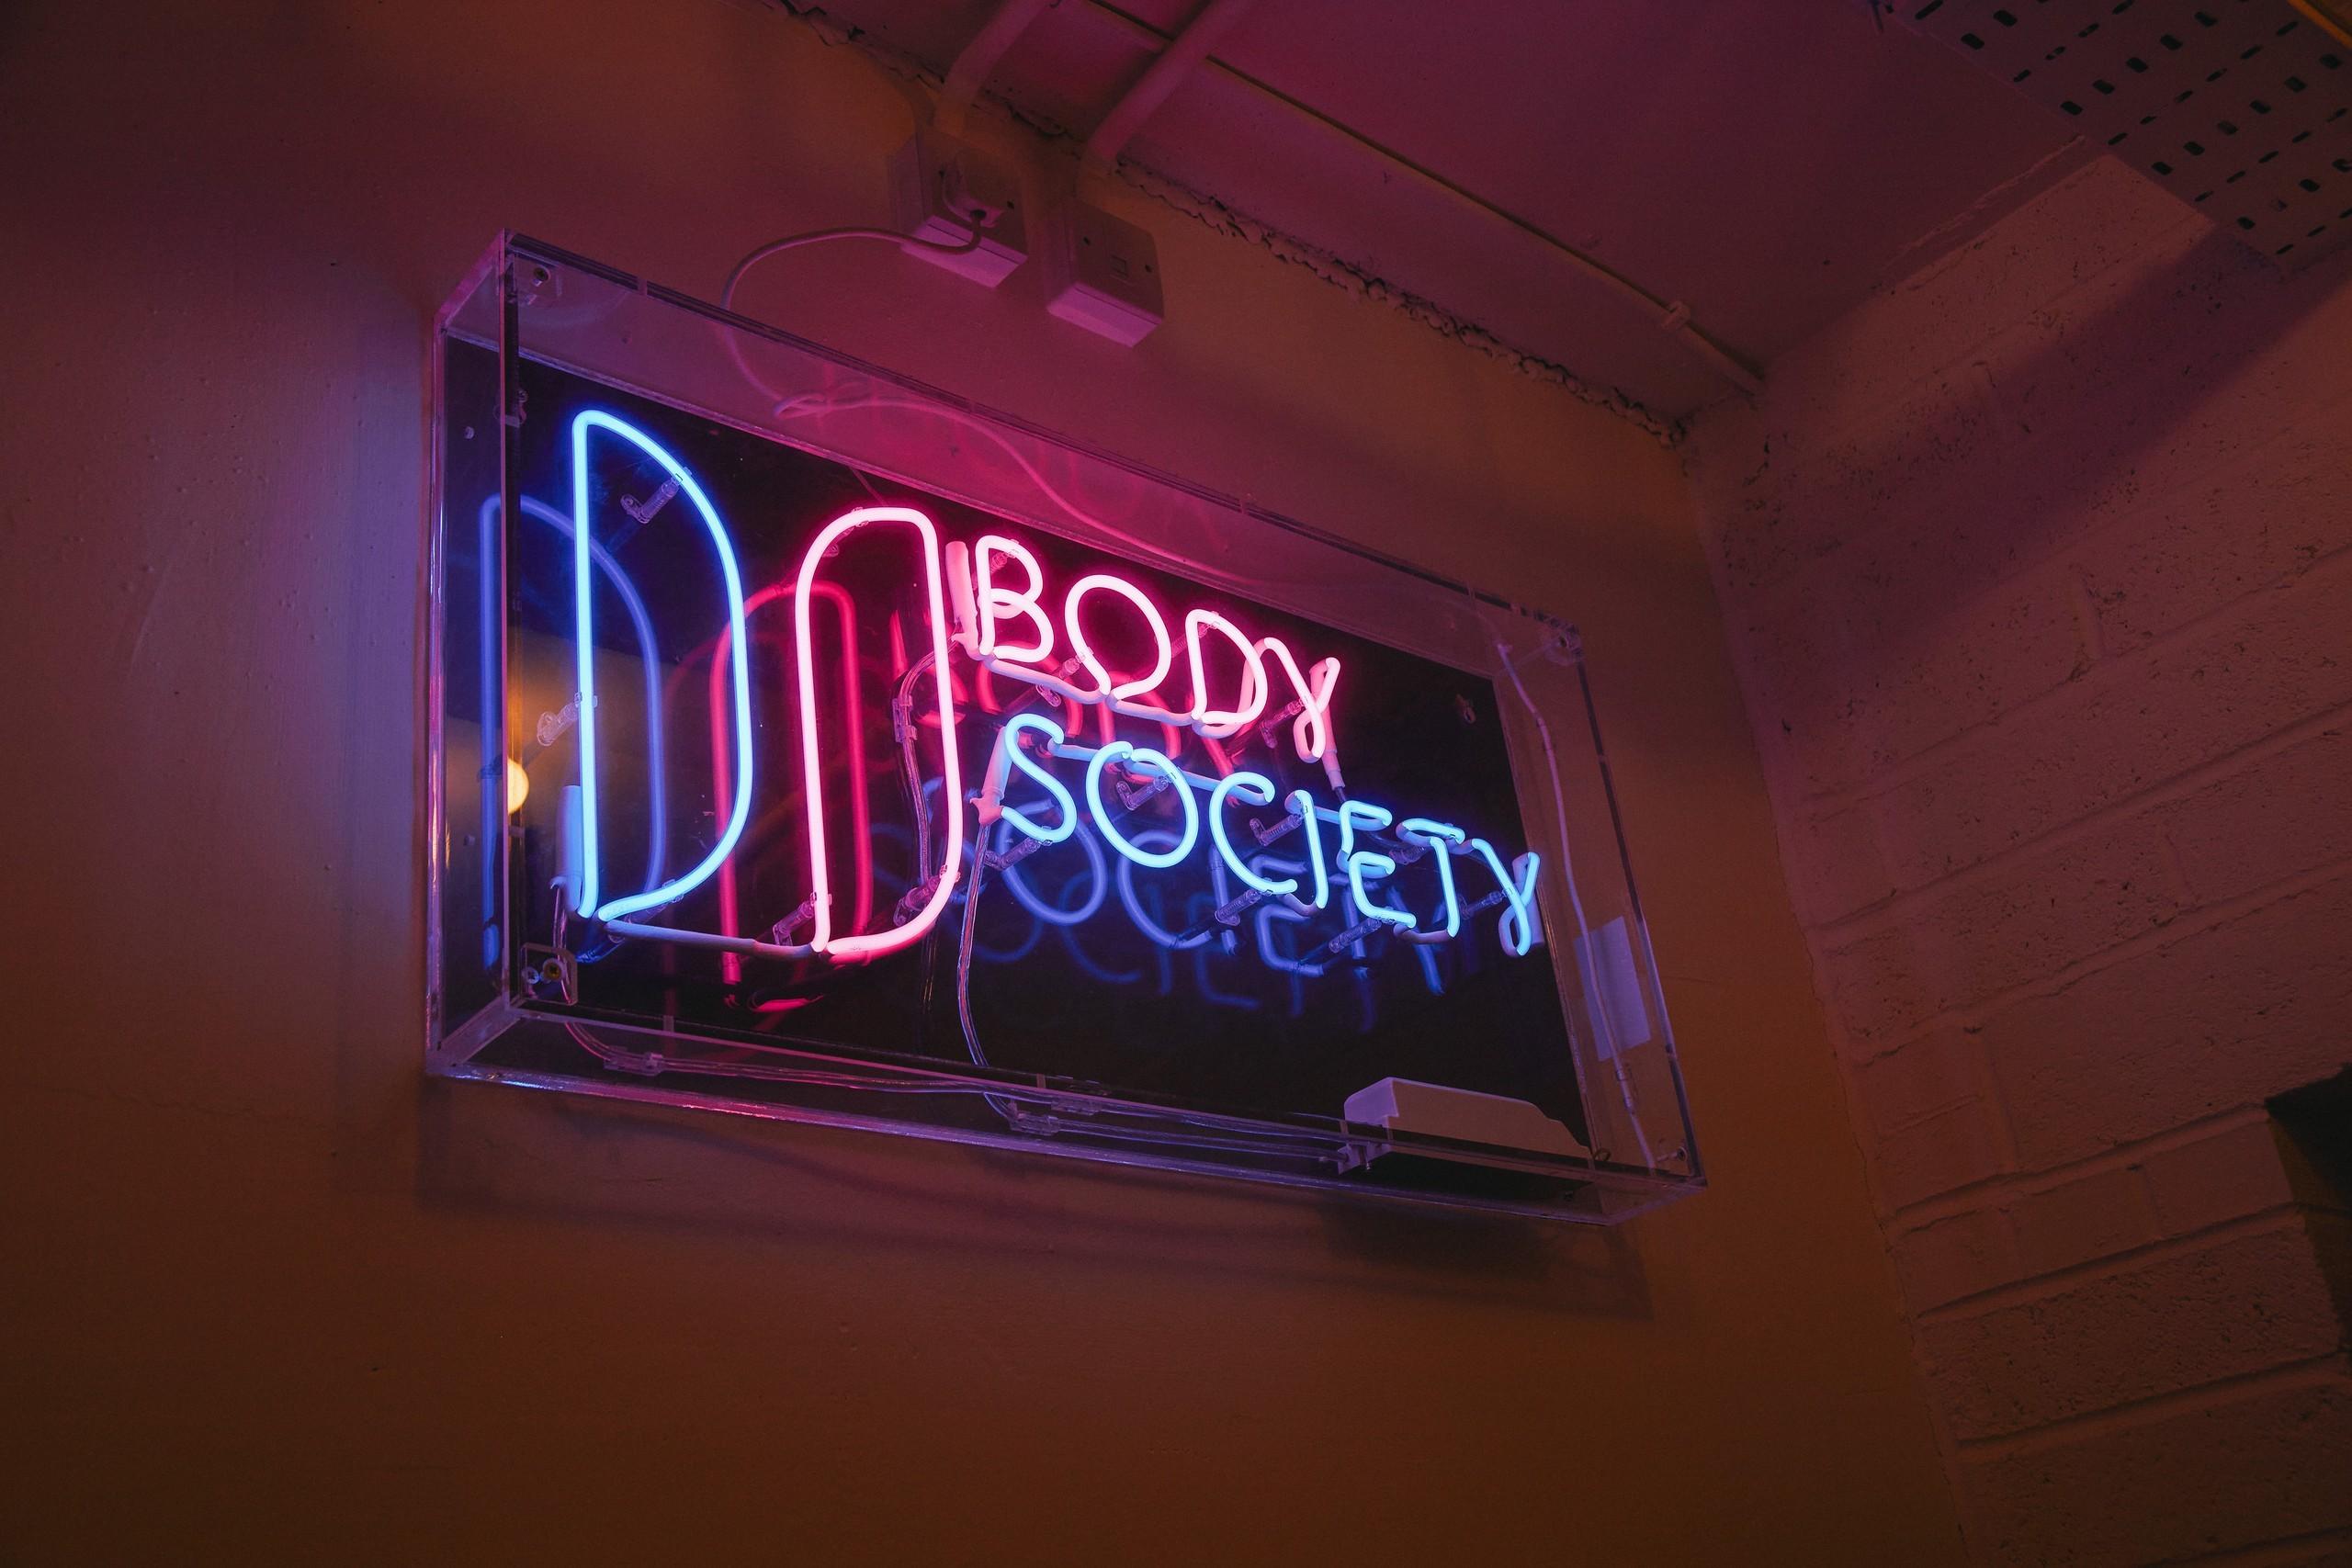 Exclusive Hire / Studio Hire, Body Society Fulham photo #50